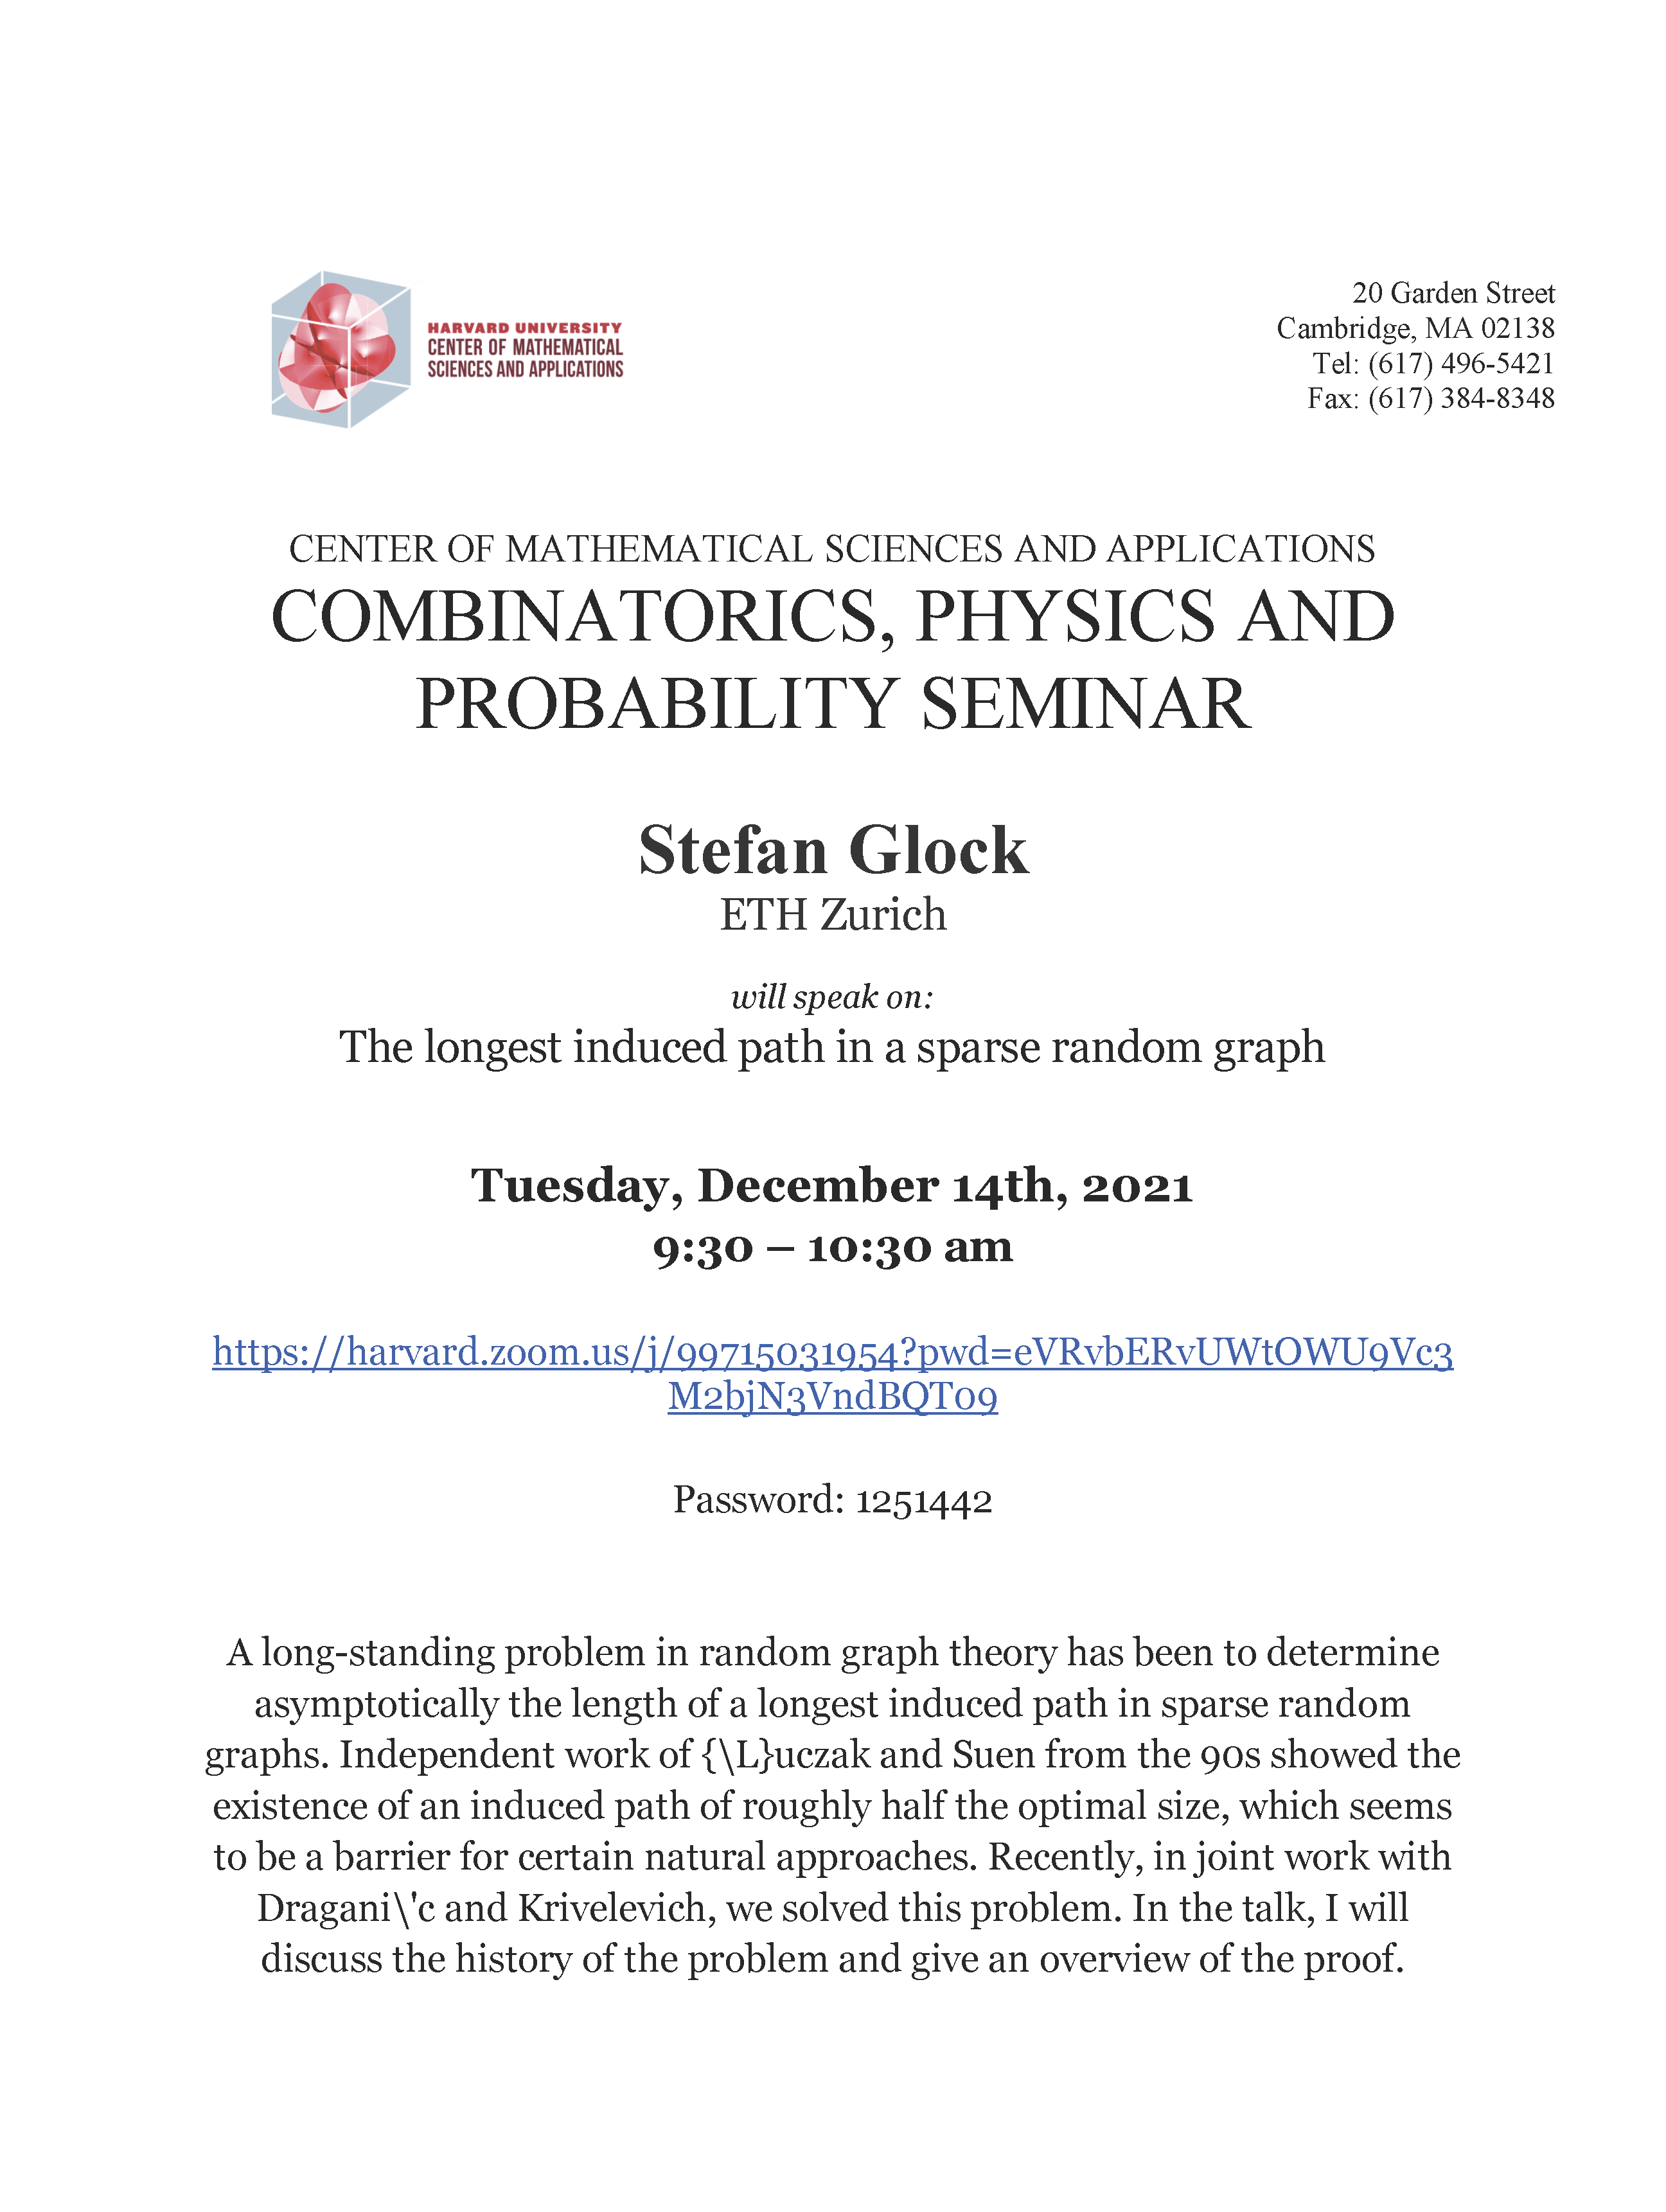 CMSA-Combinatorics-Physics-and-Probability-Seminar-12.14.2021